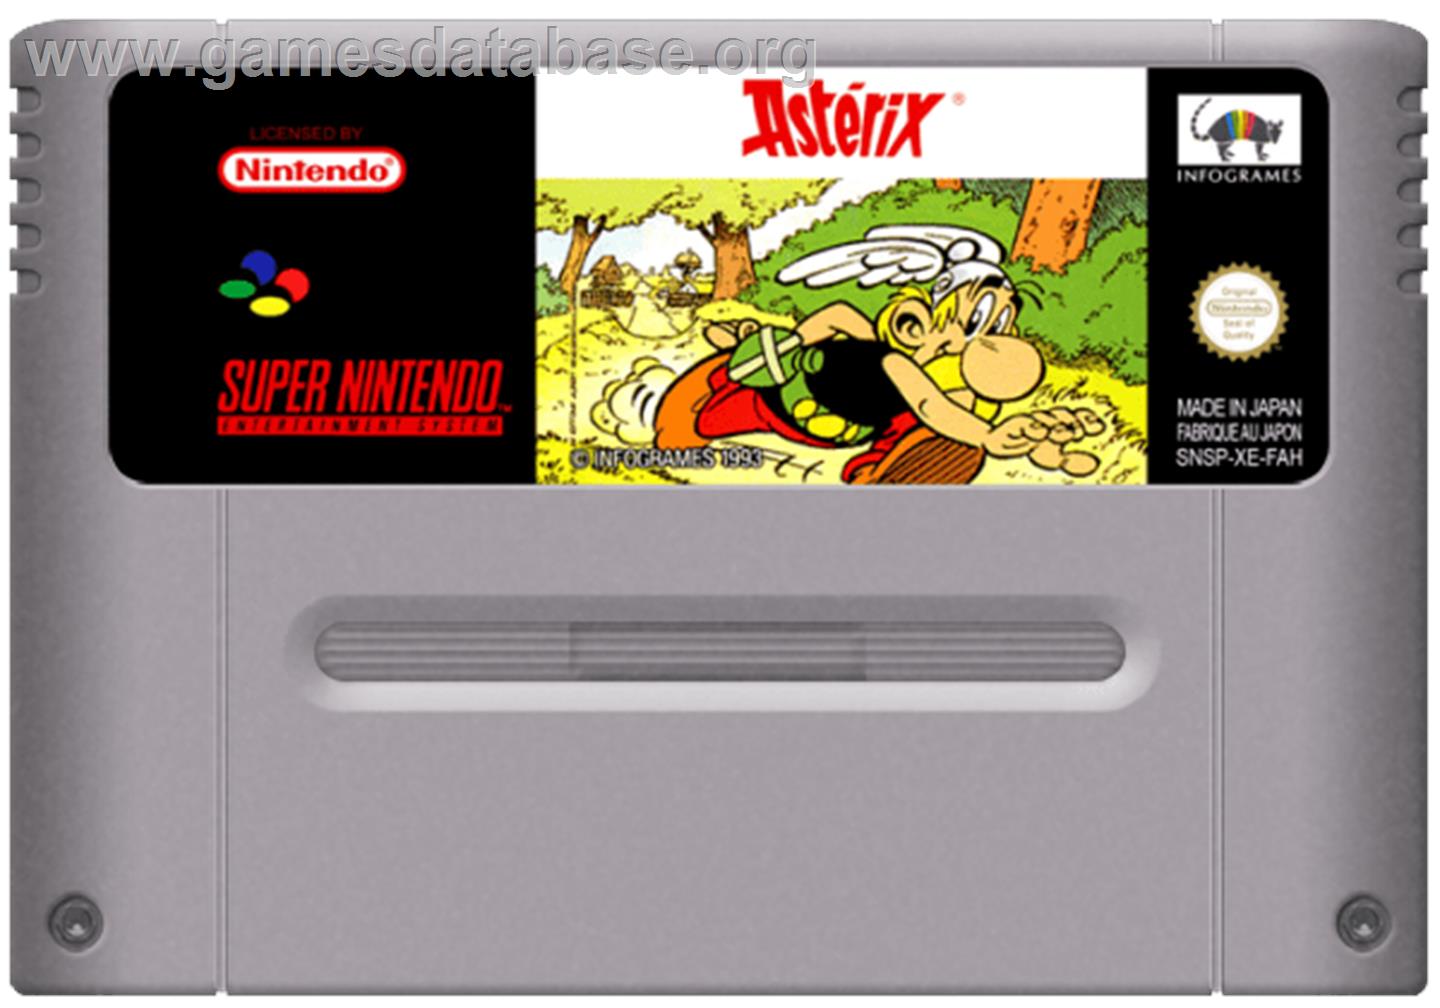 Astérix - Nintendo SNES - Artwork - Cartridge